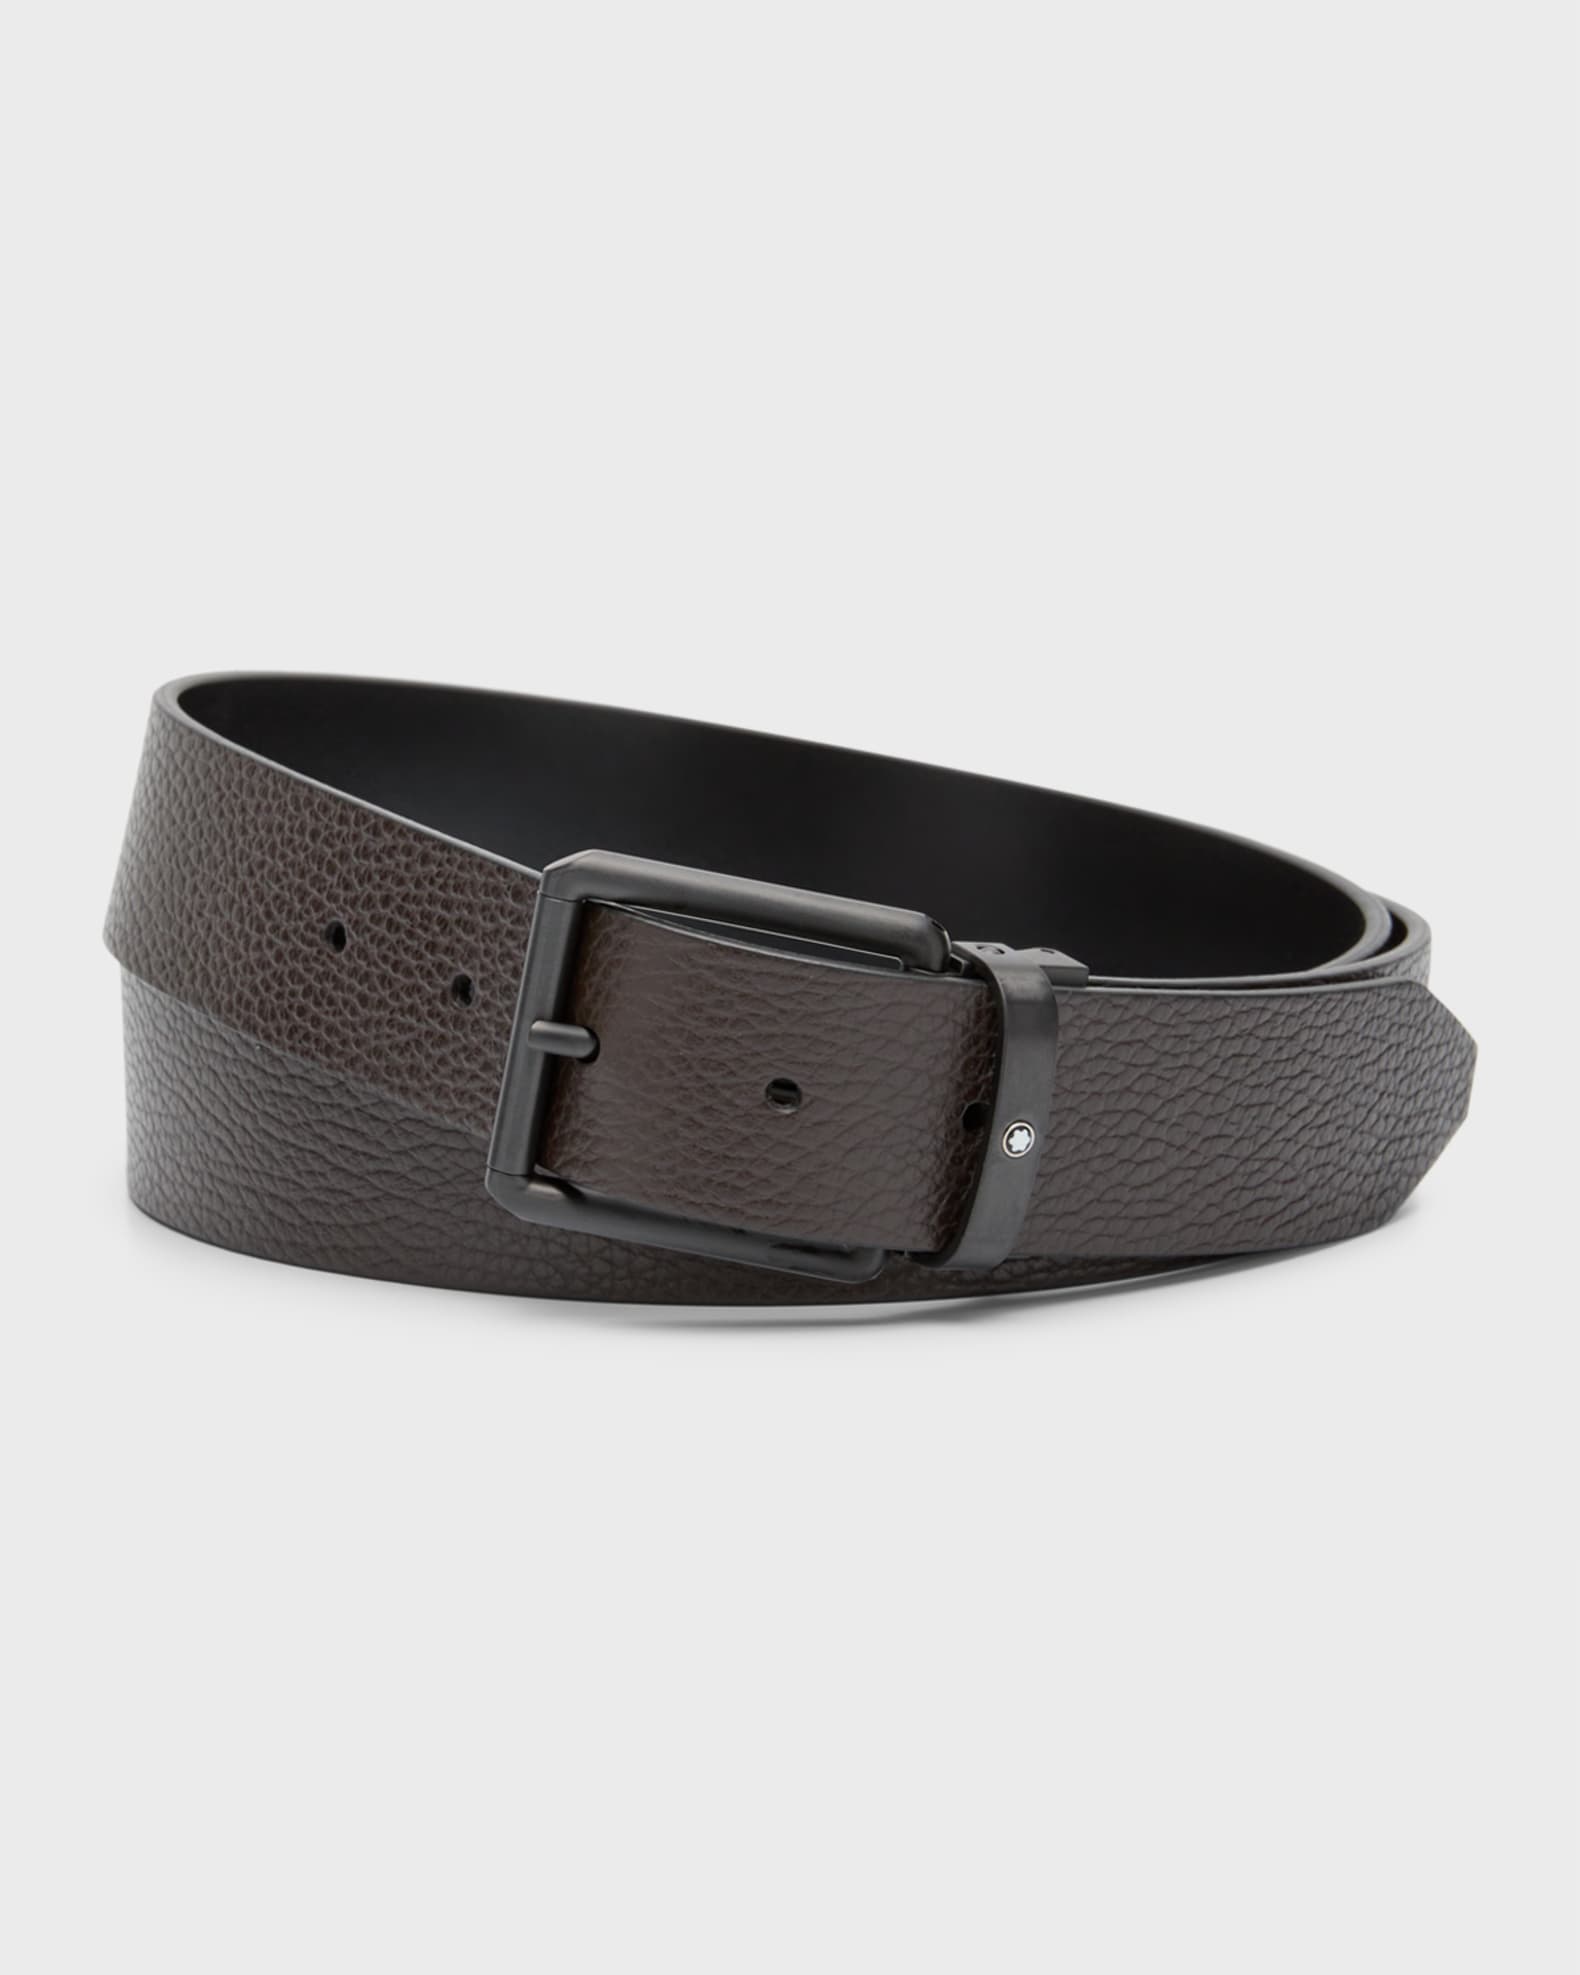 M buckle black/grey 35 mm reversible leather belt